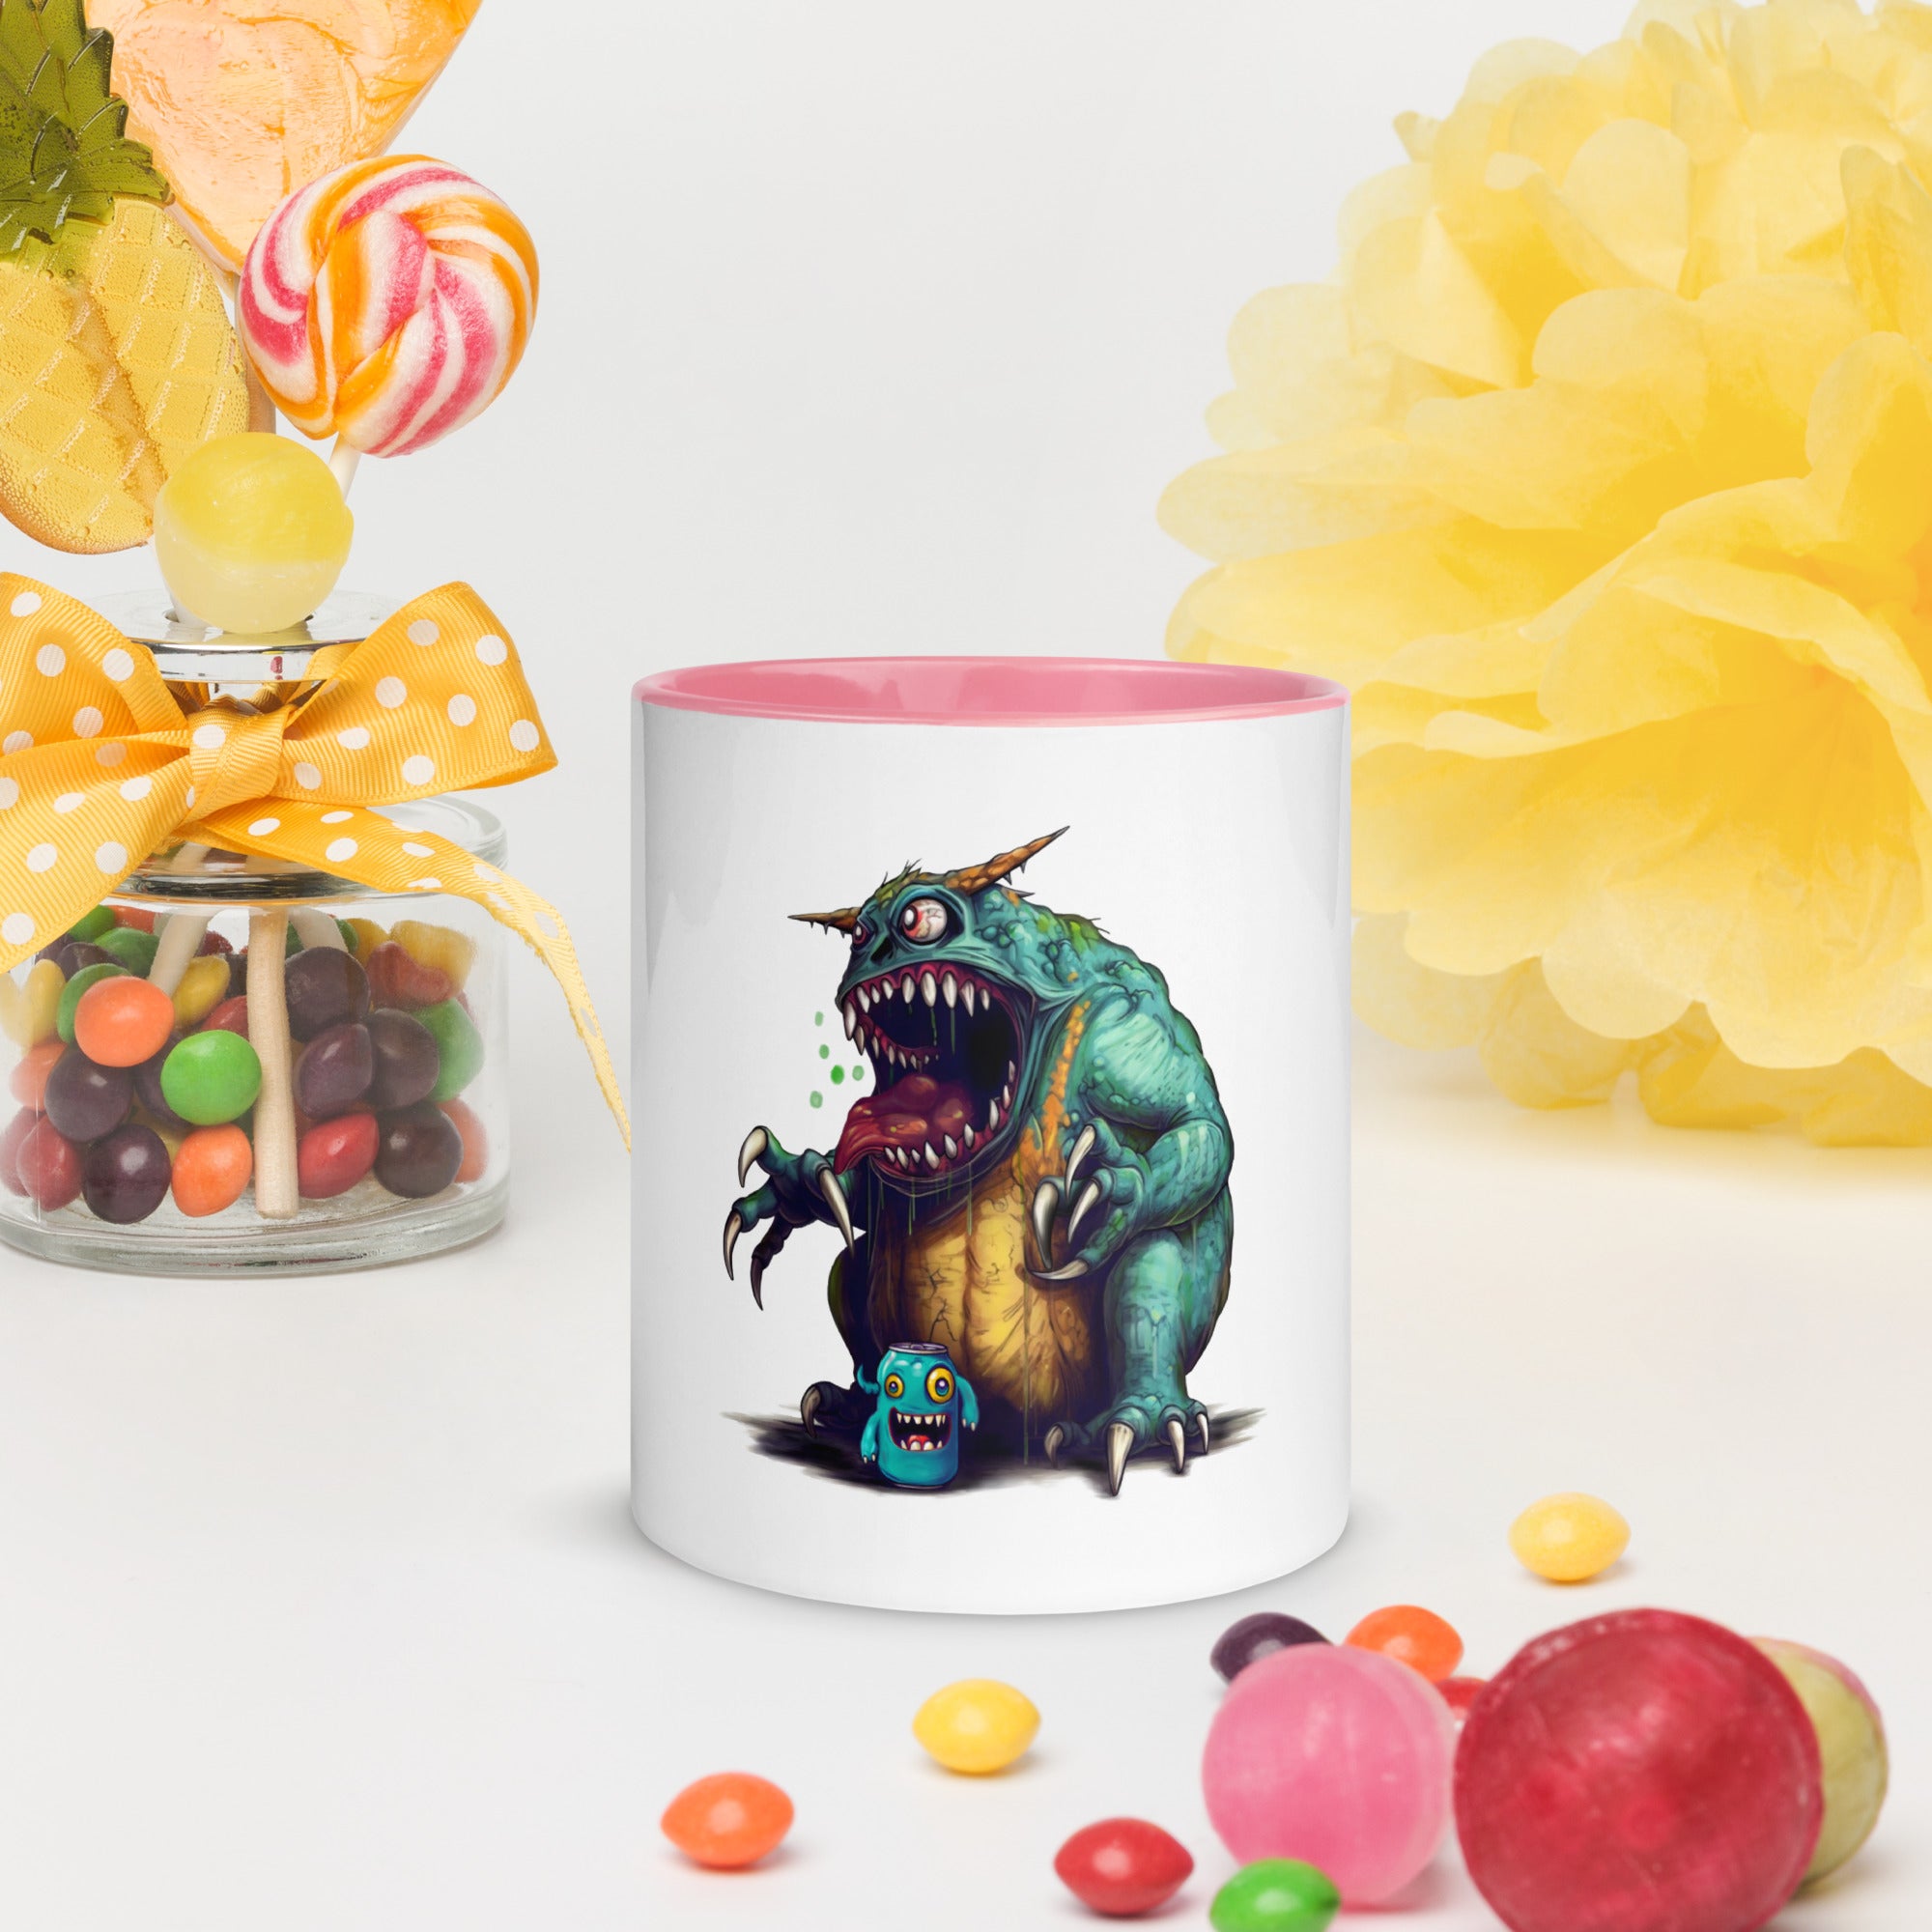 Monster Energy Drink Mug: A Hilarious Burping Monster Design by Behram Agha